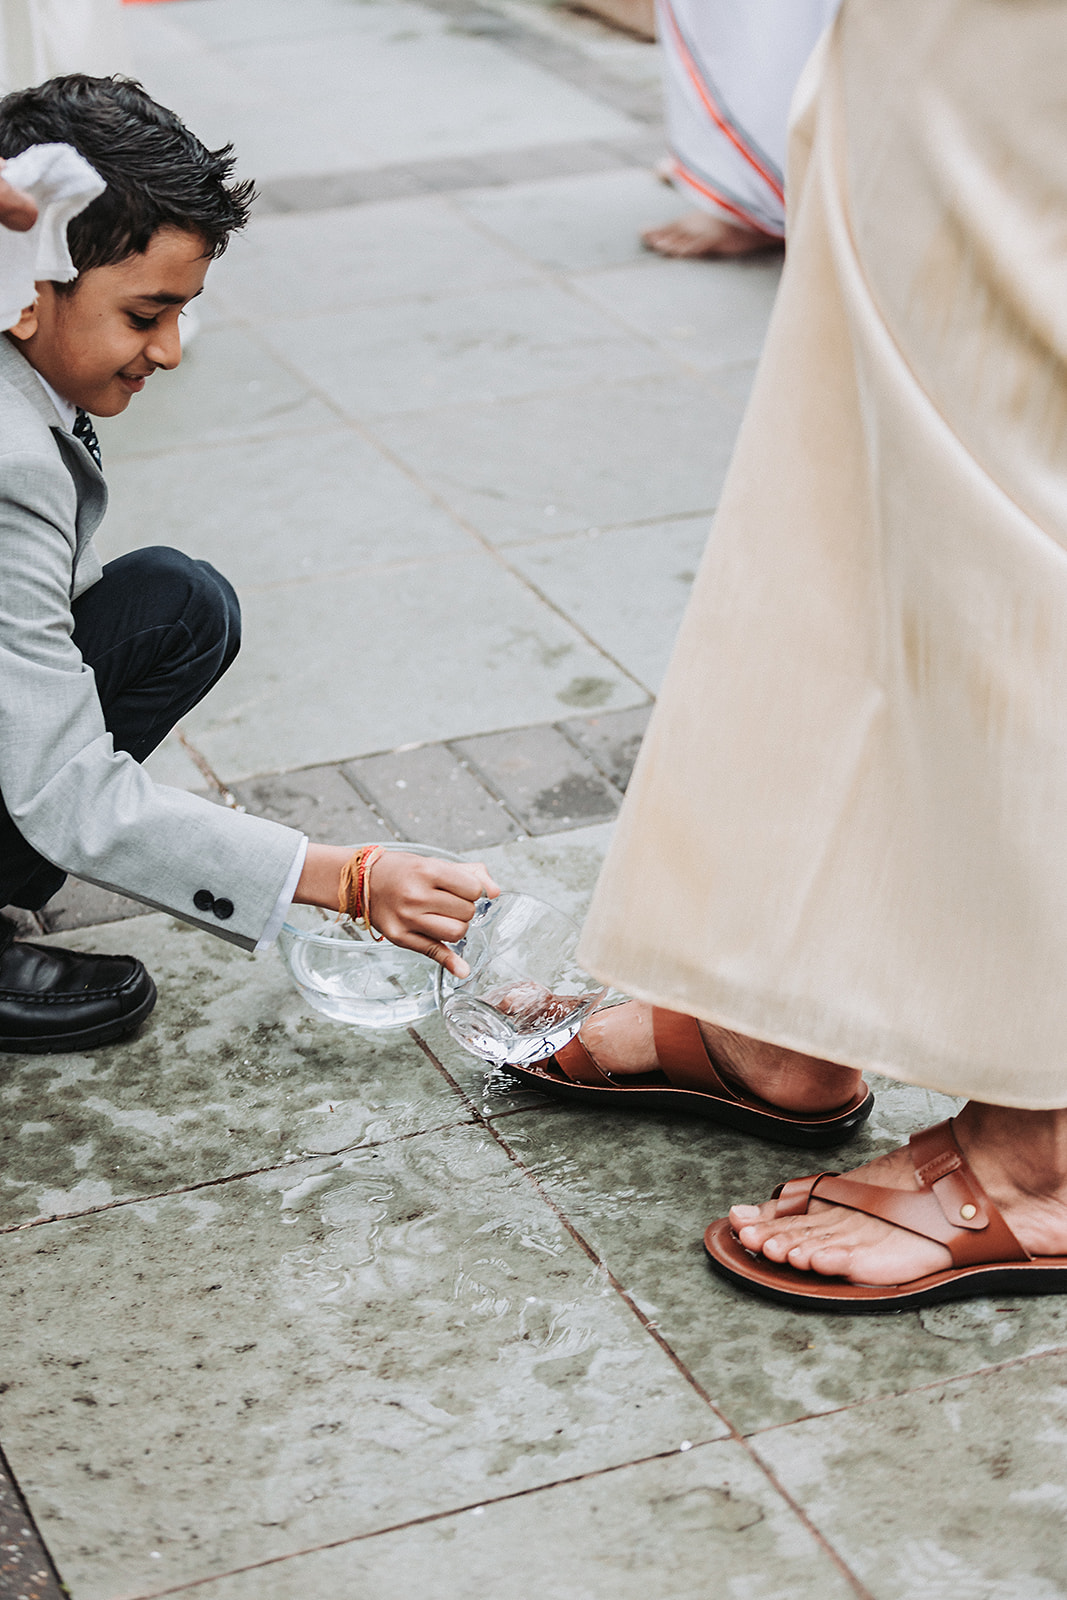 washing of the feet religious symbol of Sri Lankan wedding